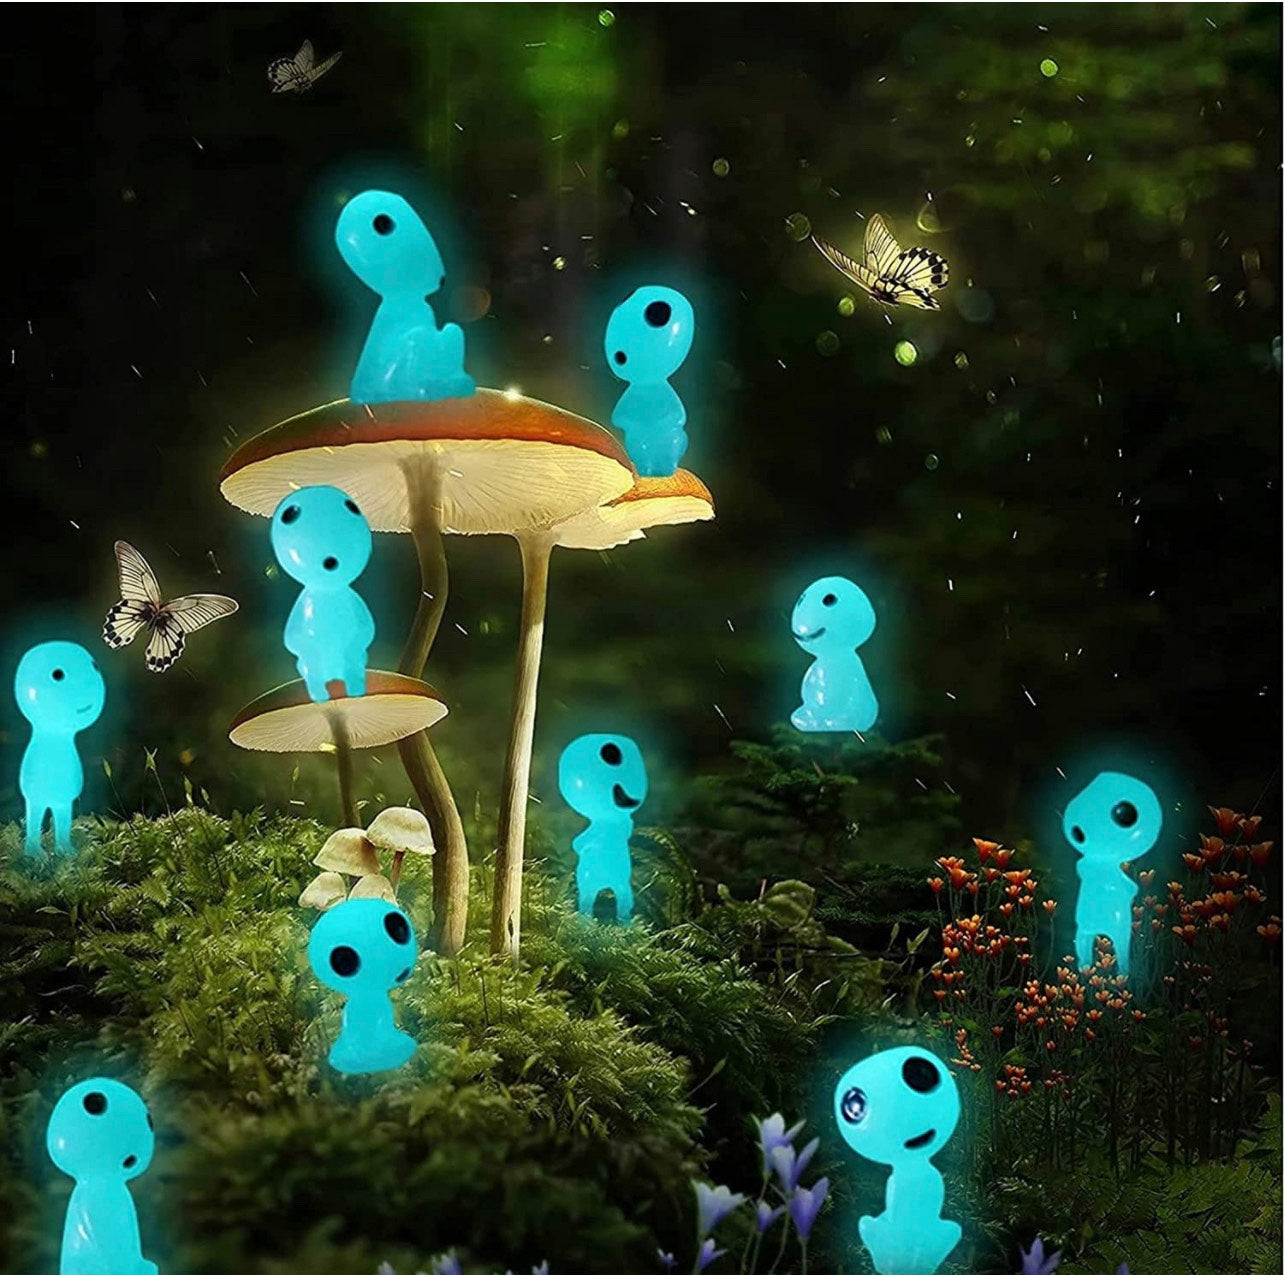 20 Pcs/Set Mononoke Luminous Tree Elves Dolls, Figures Glow in Dark, Resin Garden Gnome Statue Garden  (20pcs/Set).